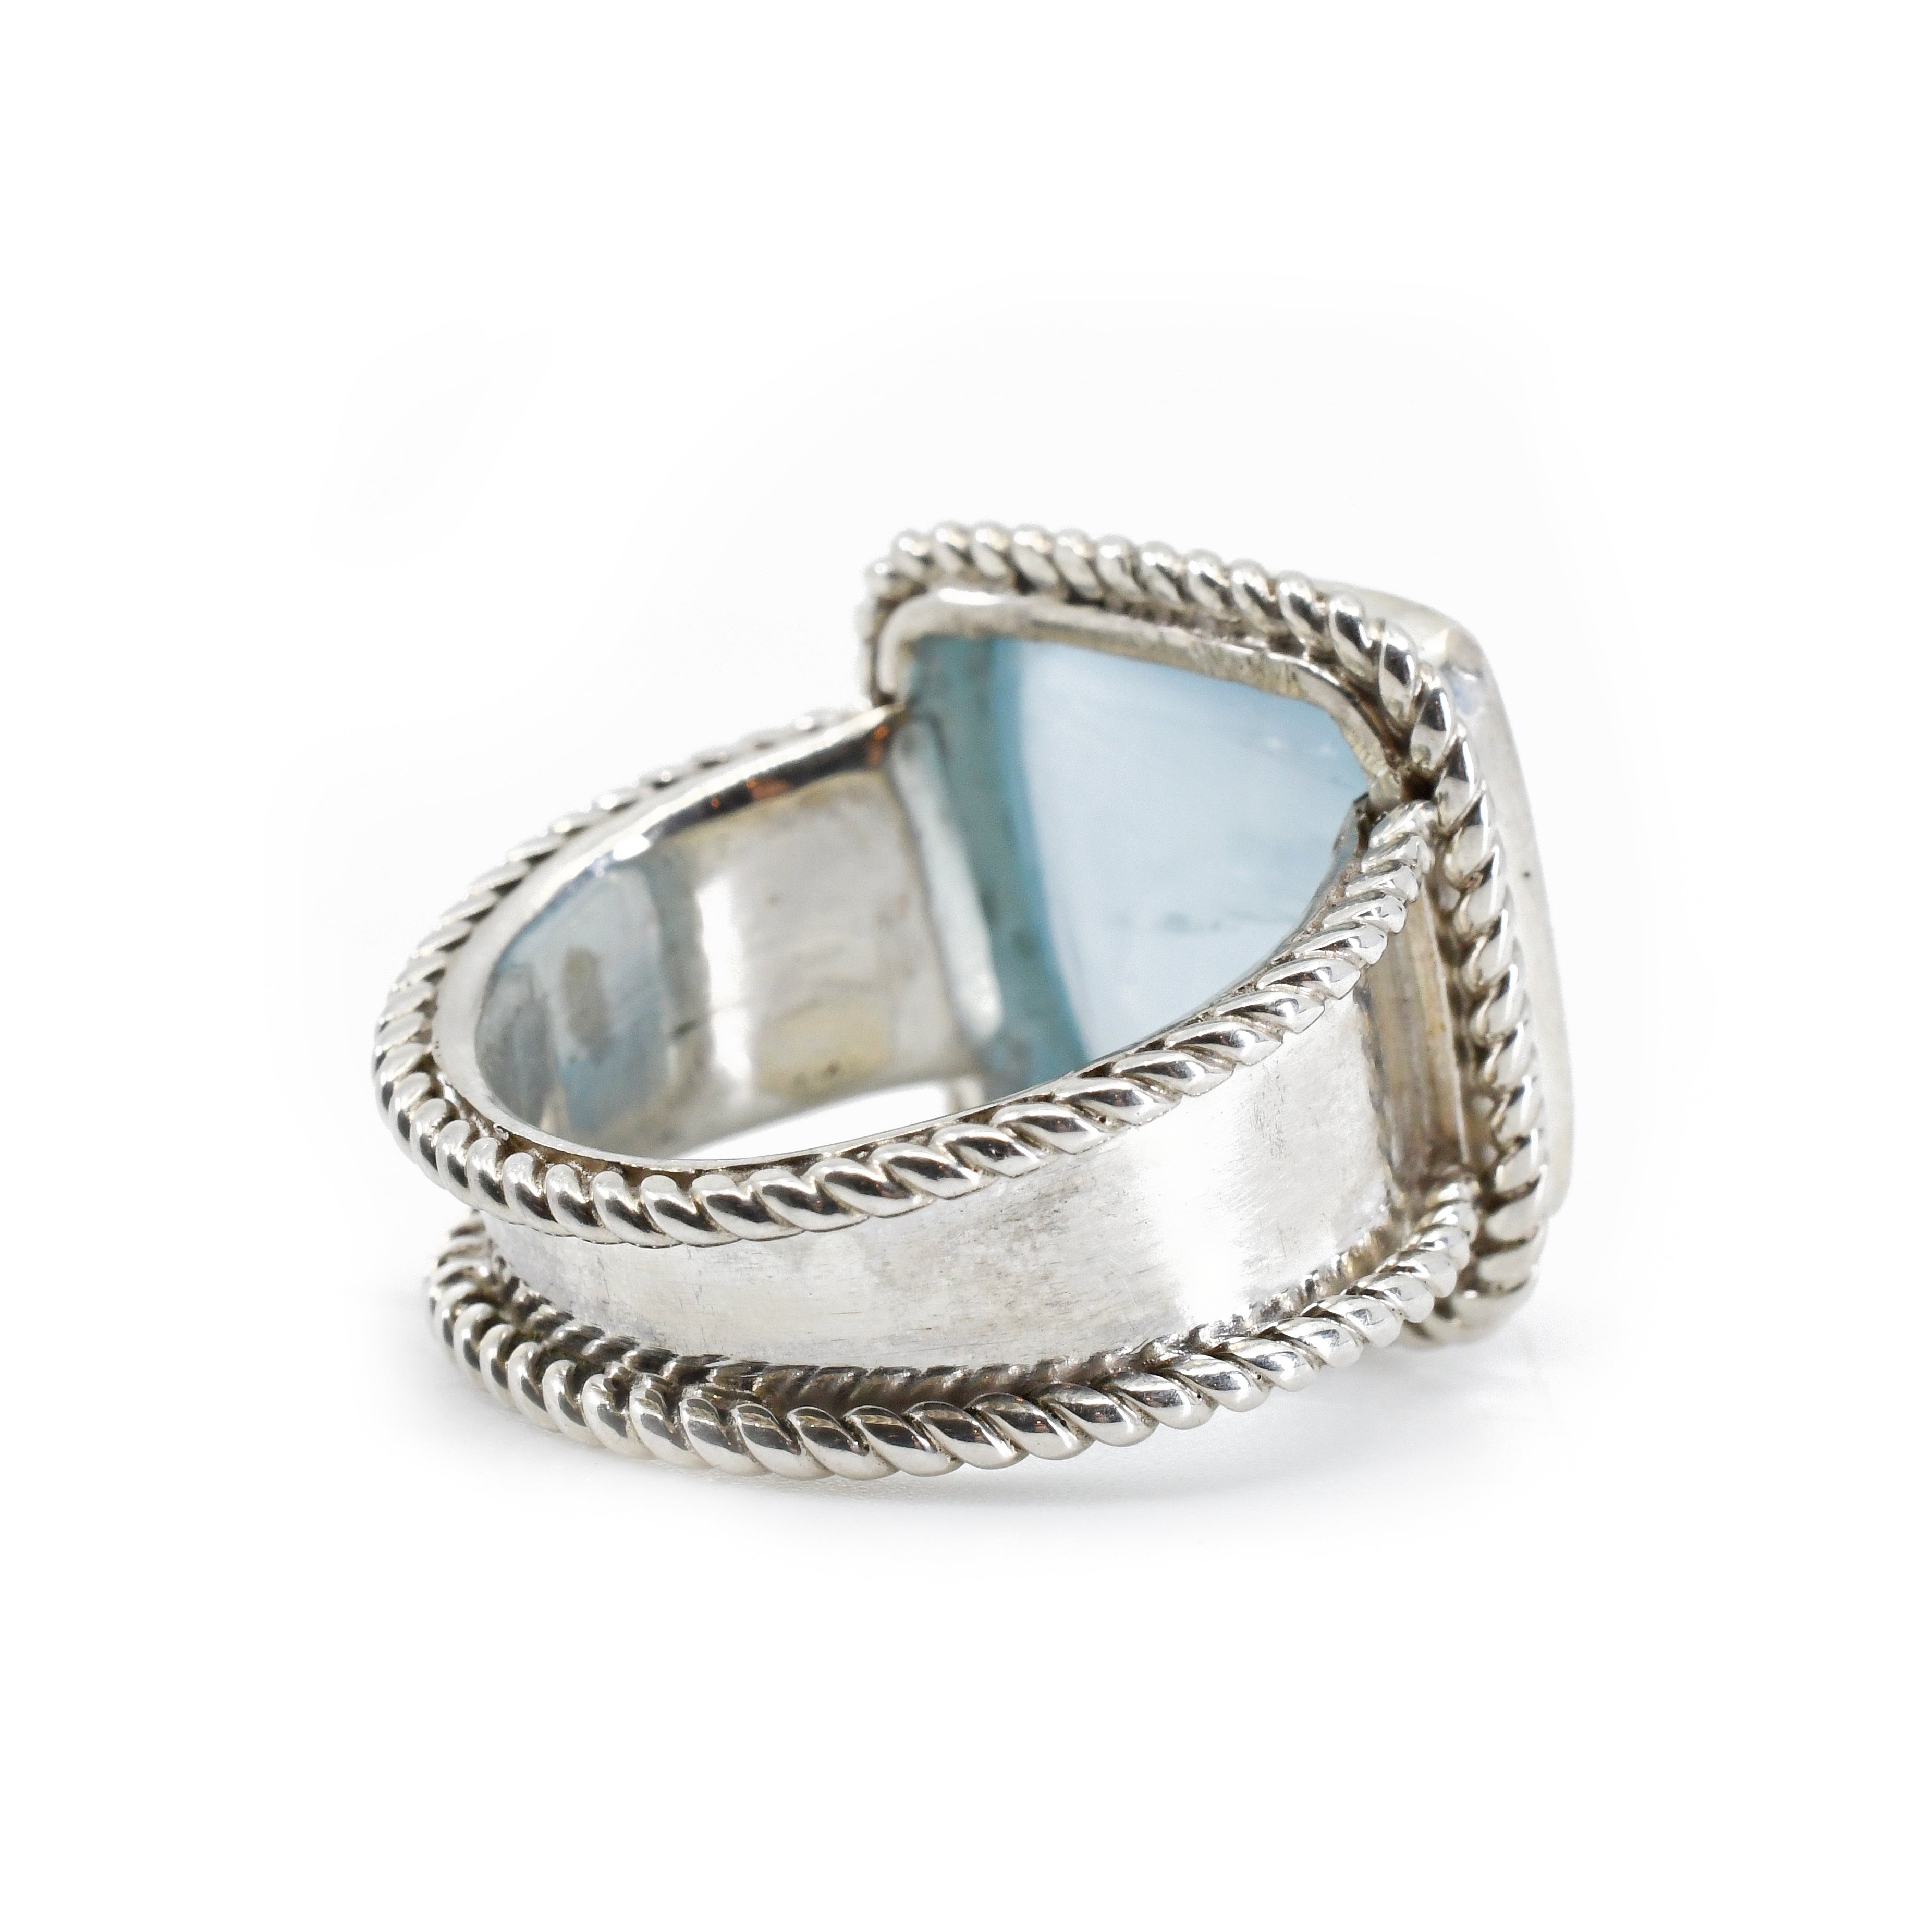 Chatoyant Aquamarine 18.1 Carat Sterling Silver Handcrafted Gemstone Ring - GGO-067 - Crystalarium